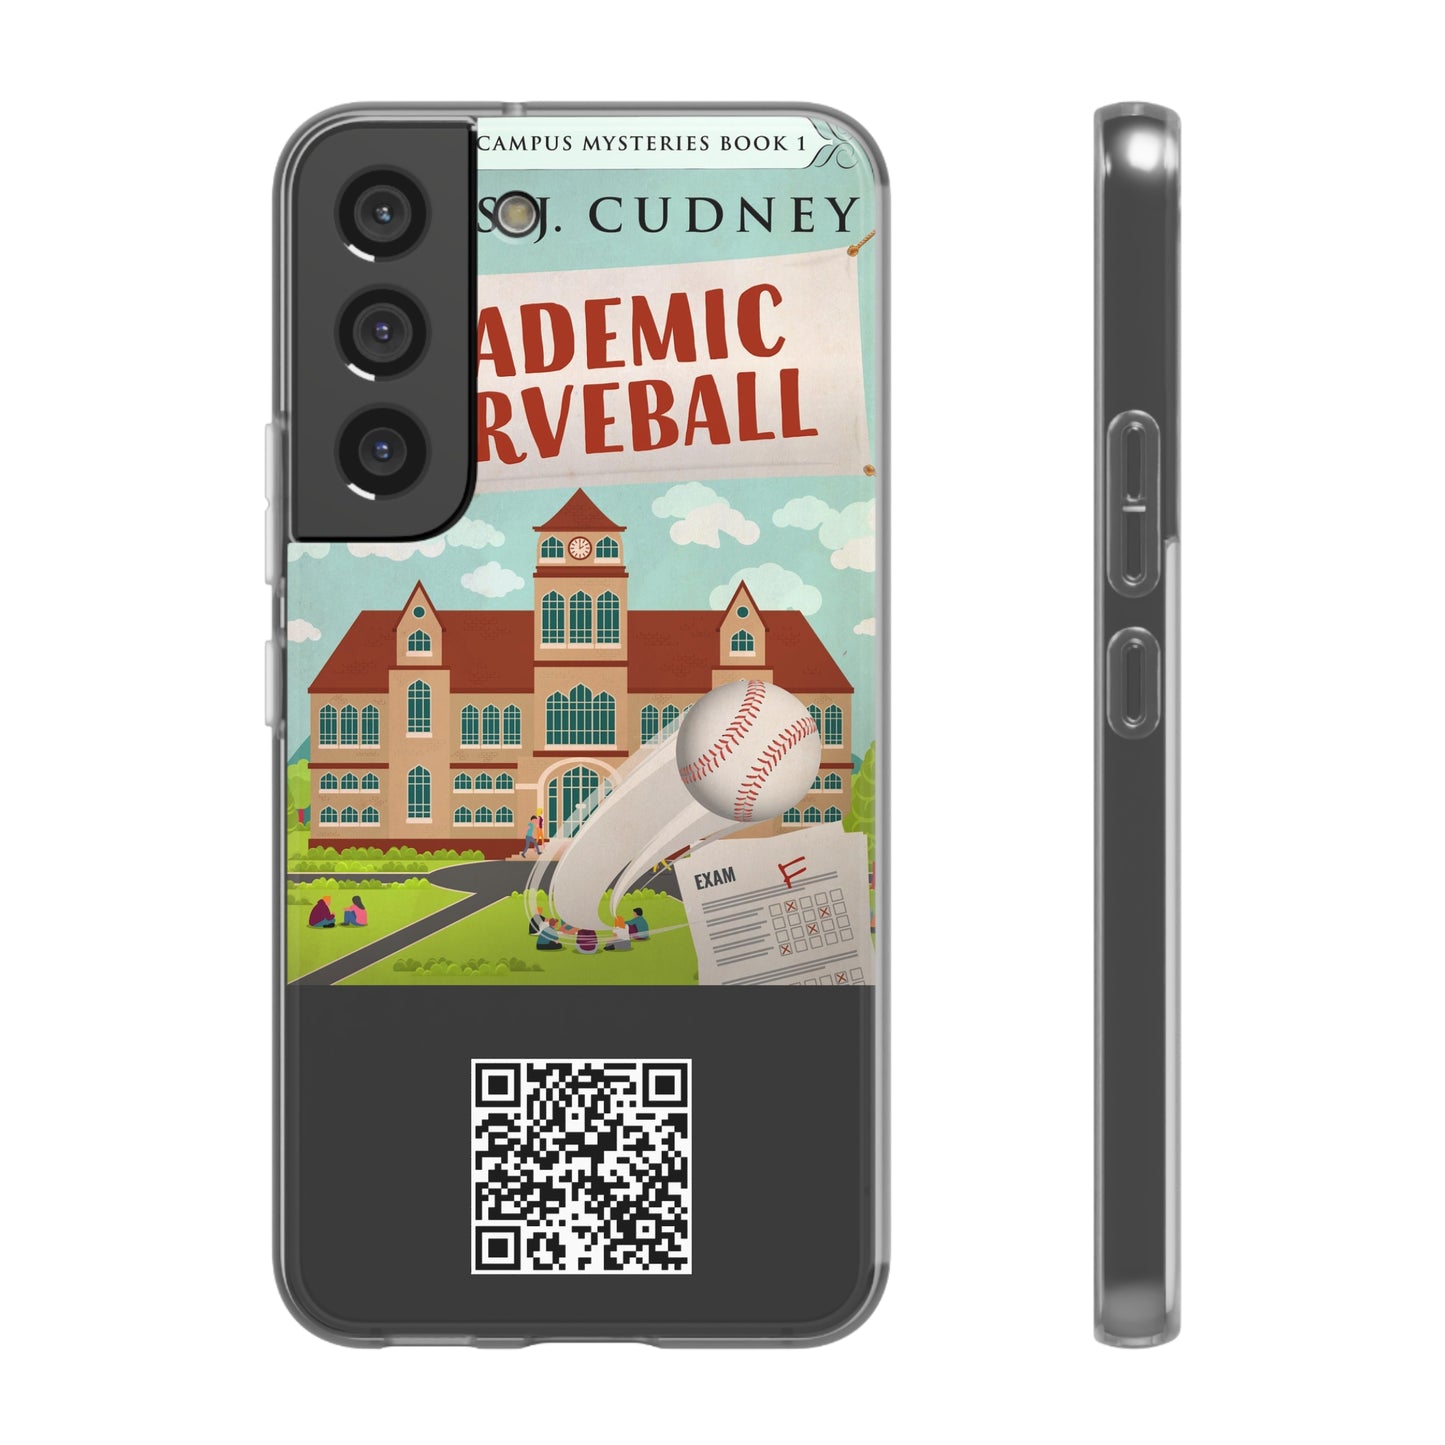 Academic Curveball - Flexible Phone Case